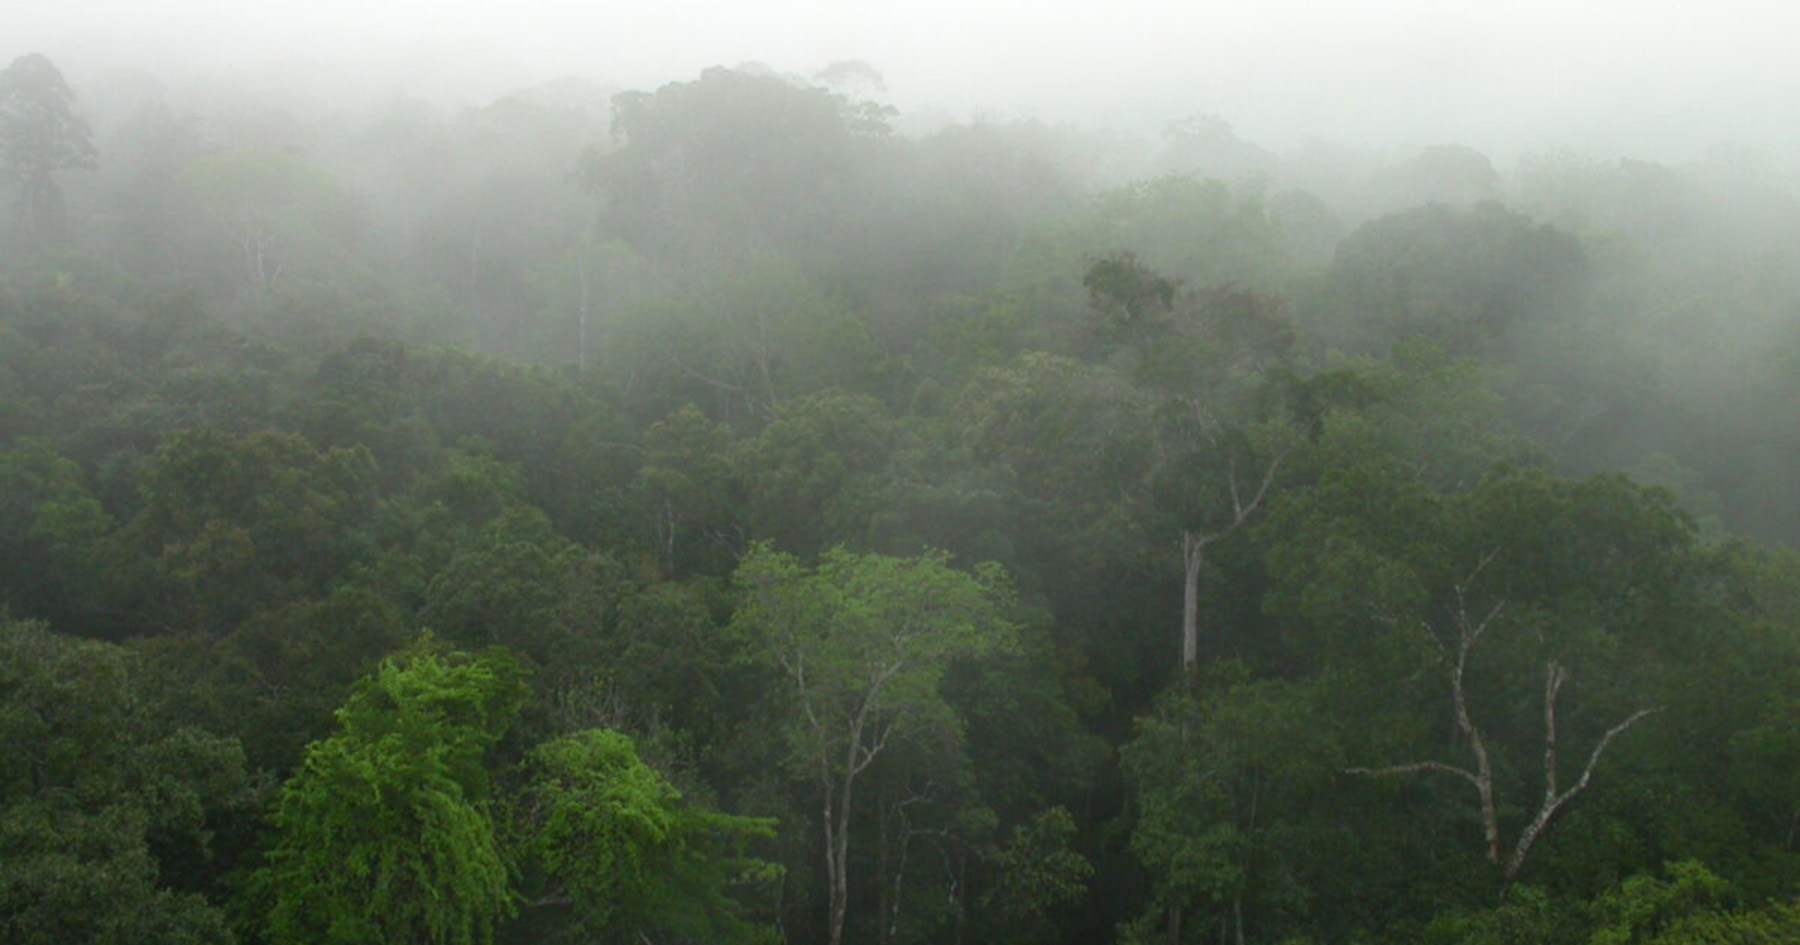 Rainforest near Manaus, capital of Amazonas state, Brazil. Image courtesy of Hans ter Steege.